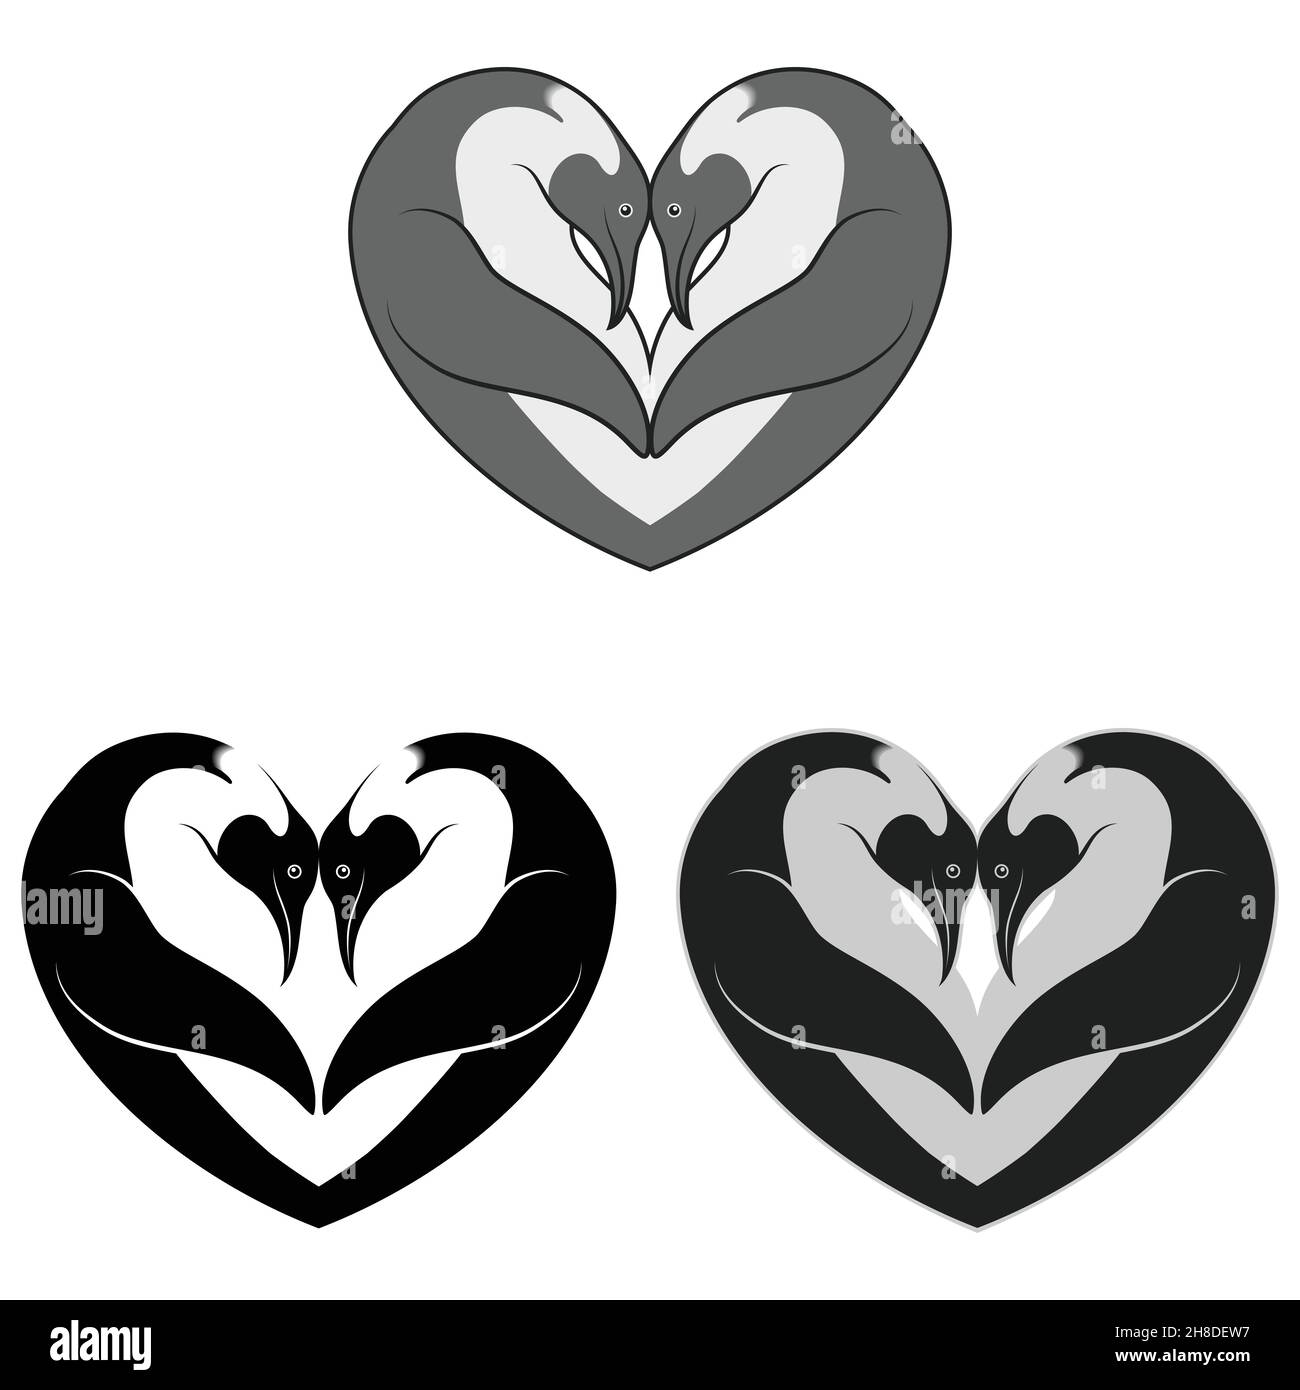 Two Emperor Penguins Heart Shape Design, Heart Shaped Animals Stock Vector